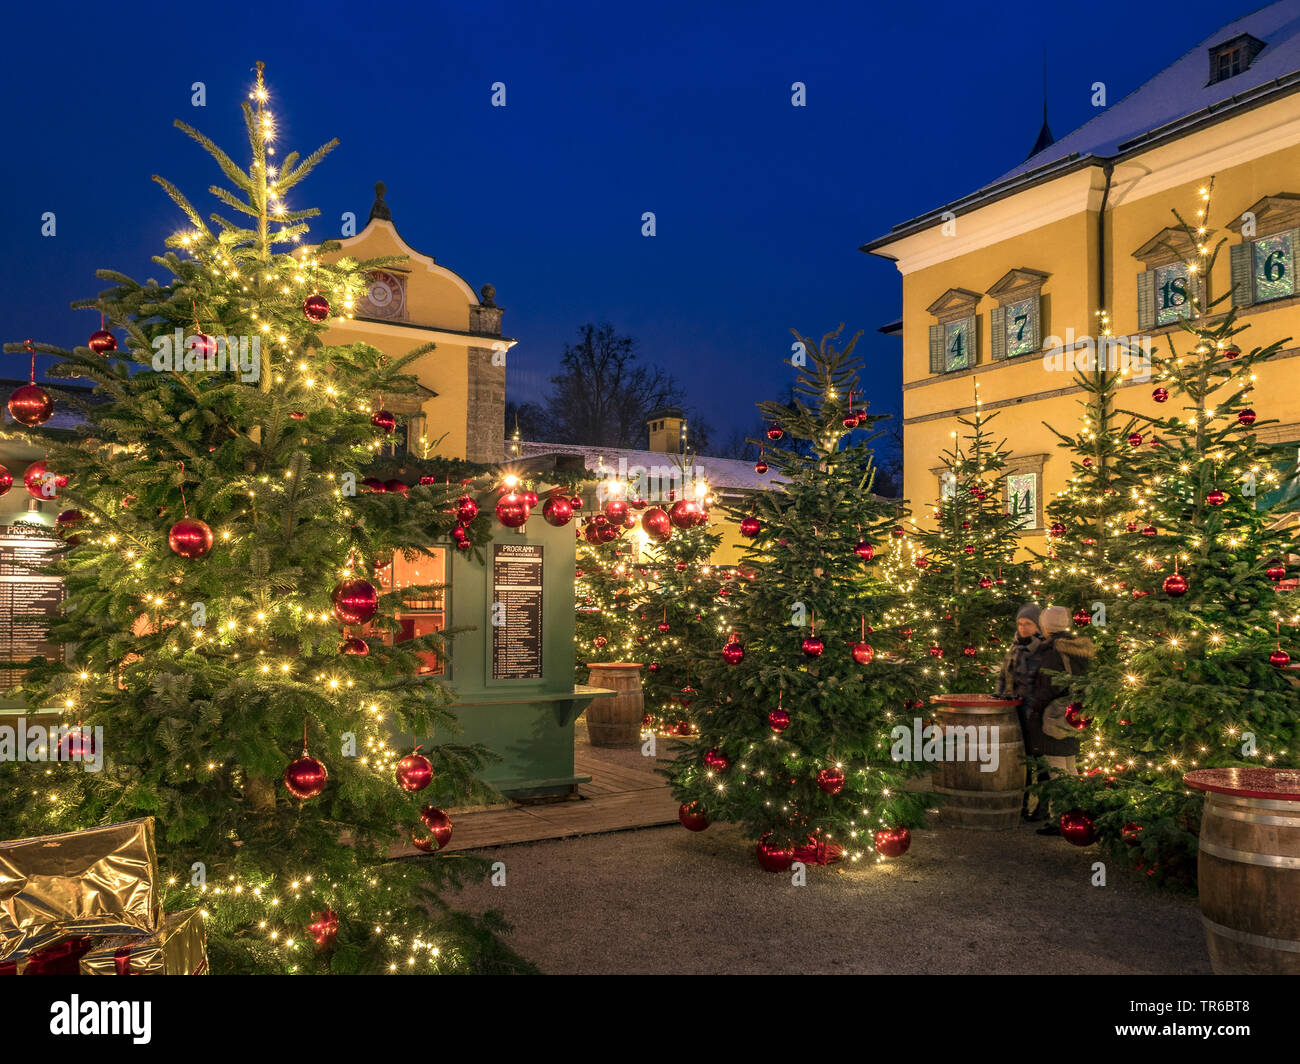 Mercatino di Natale il castello di Hellbrunn, Hellbrunner Adventzauber, Salisburgo, Austria Foto Stock